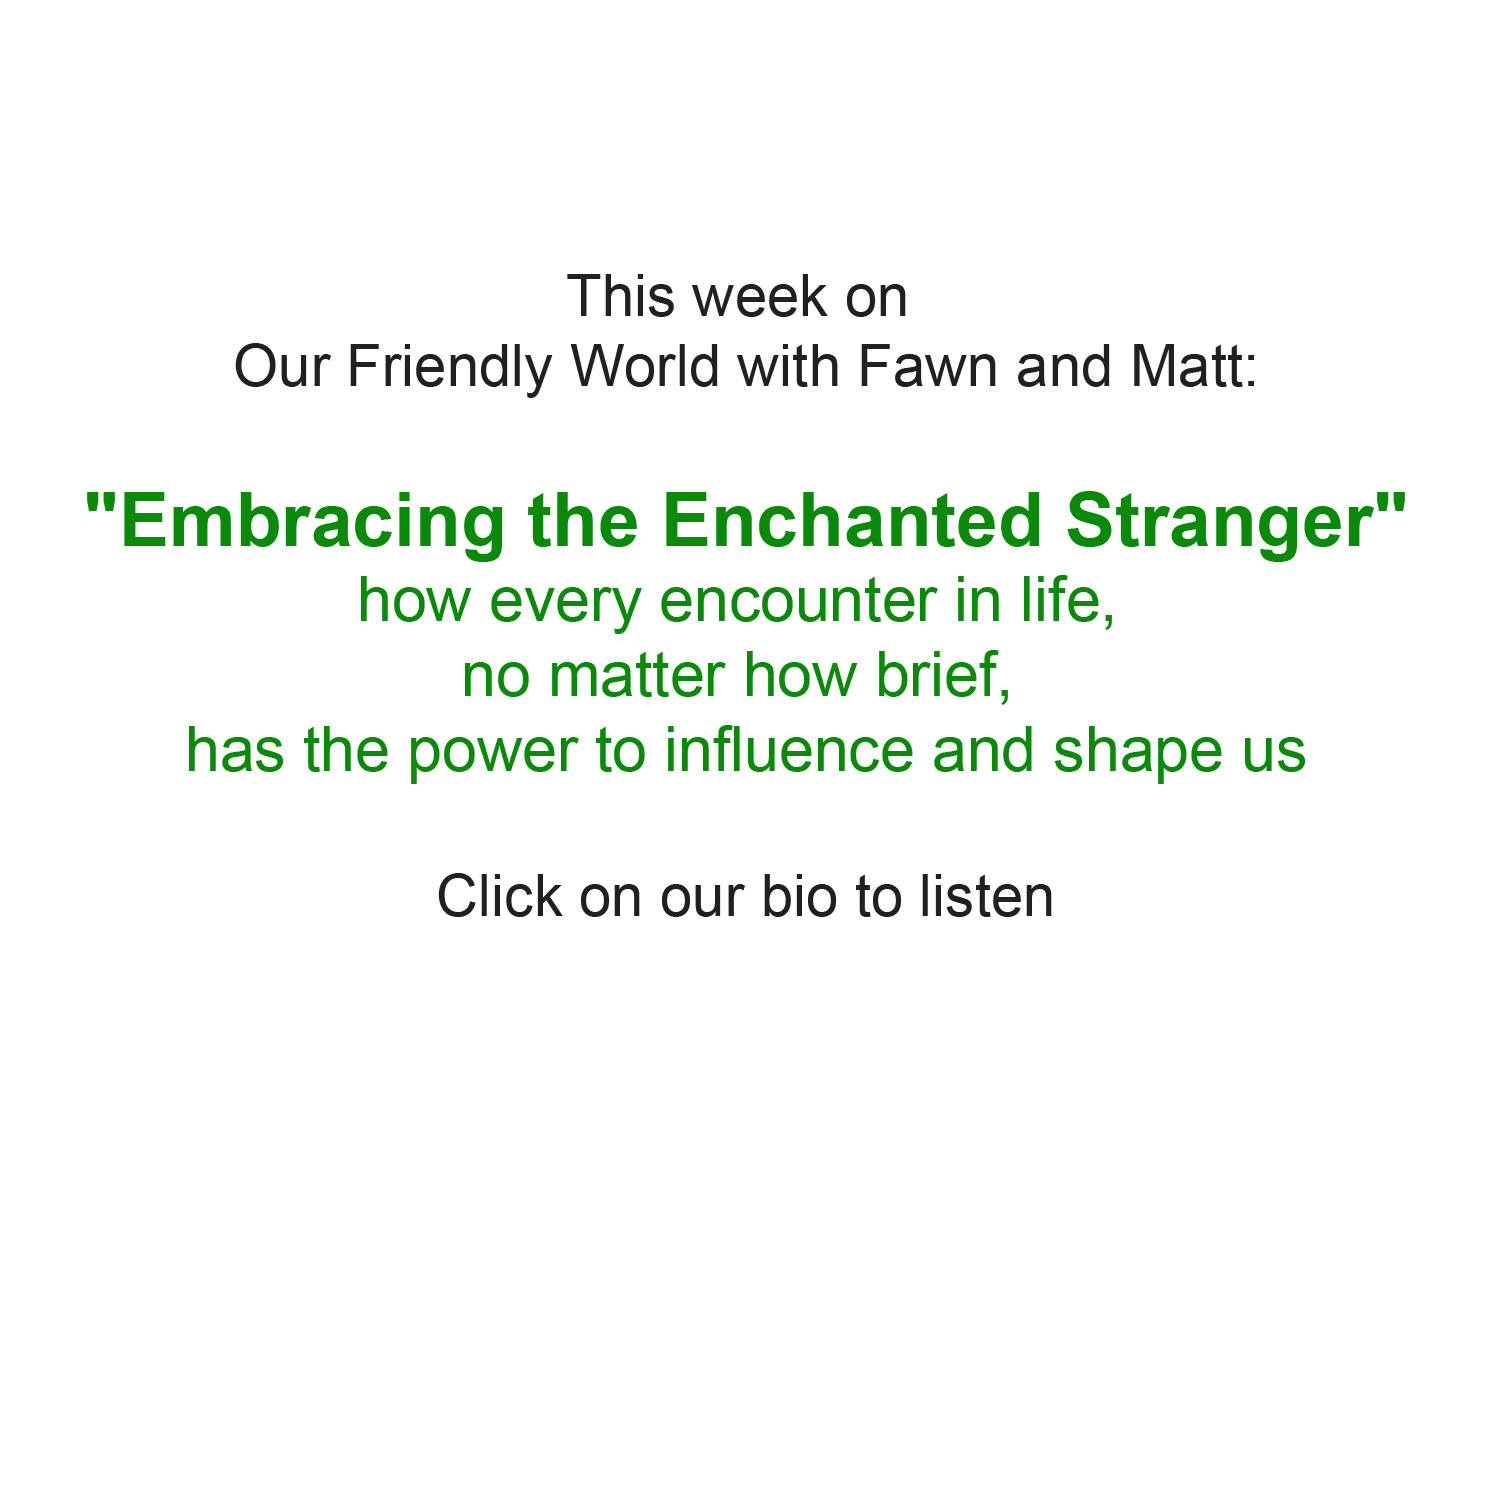 "Embracing the Enchanted Stranger"